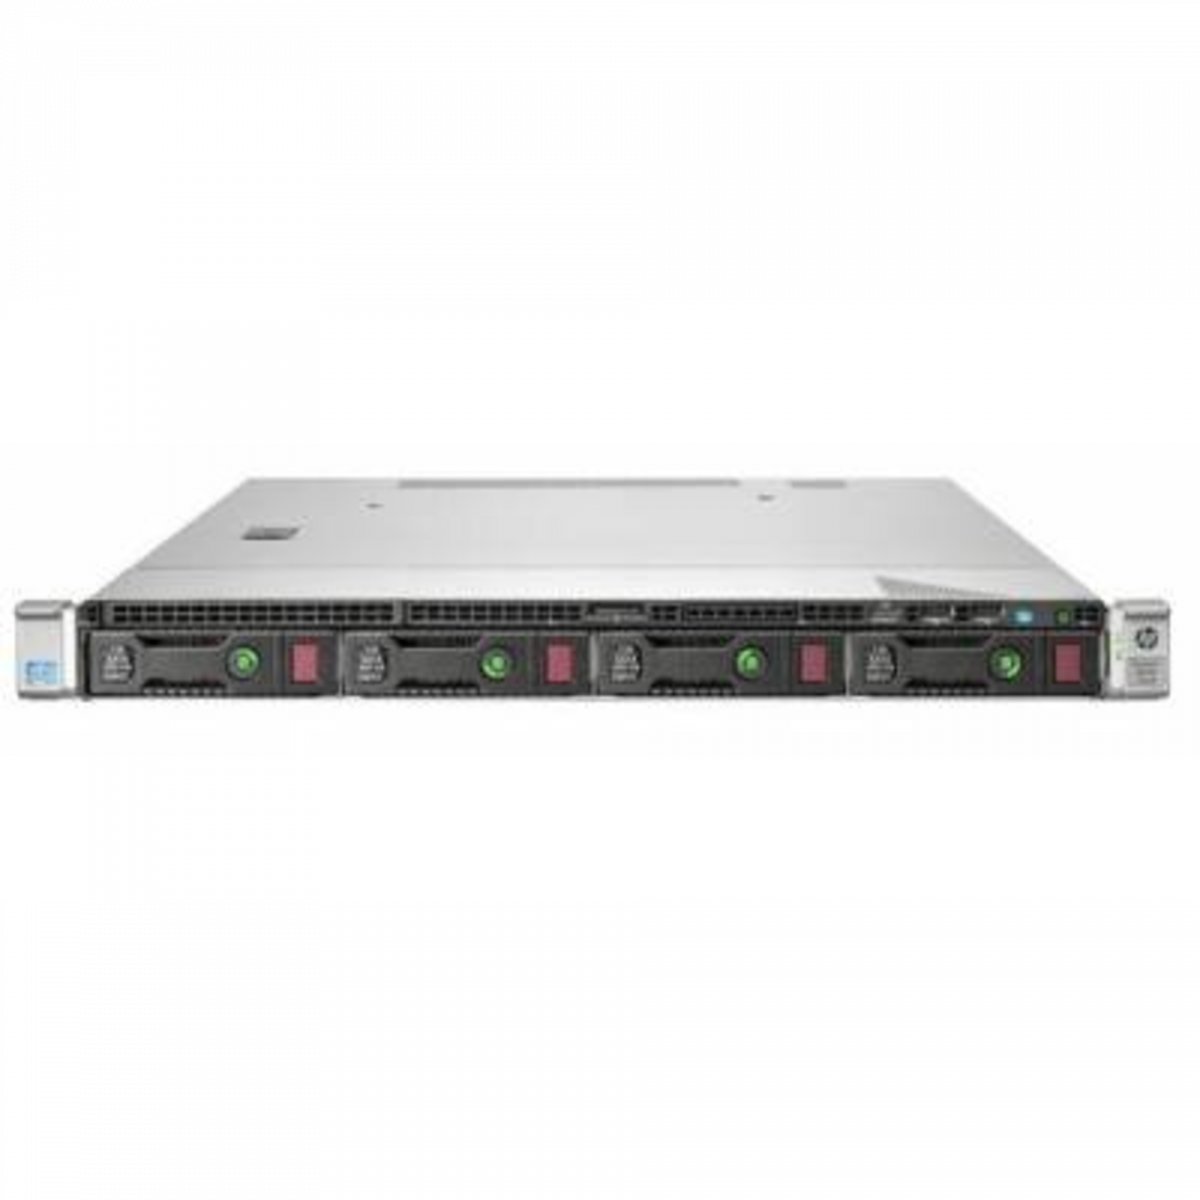 Сервер HP Proliant DL360p Gen8, 2 процессора Intel Xeon 8C E5-2670, 64GB DRAM, 4LFF, P420i/1GB FBWC